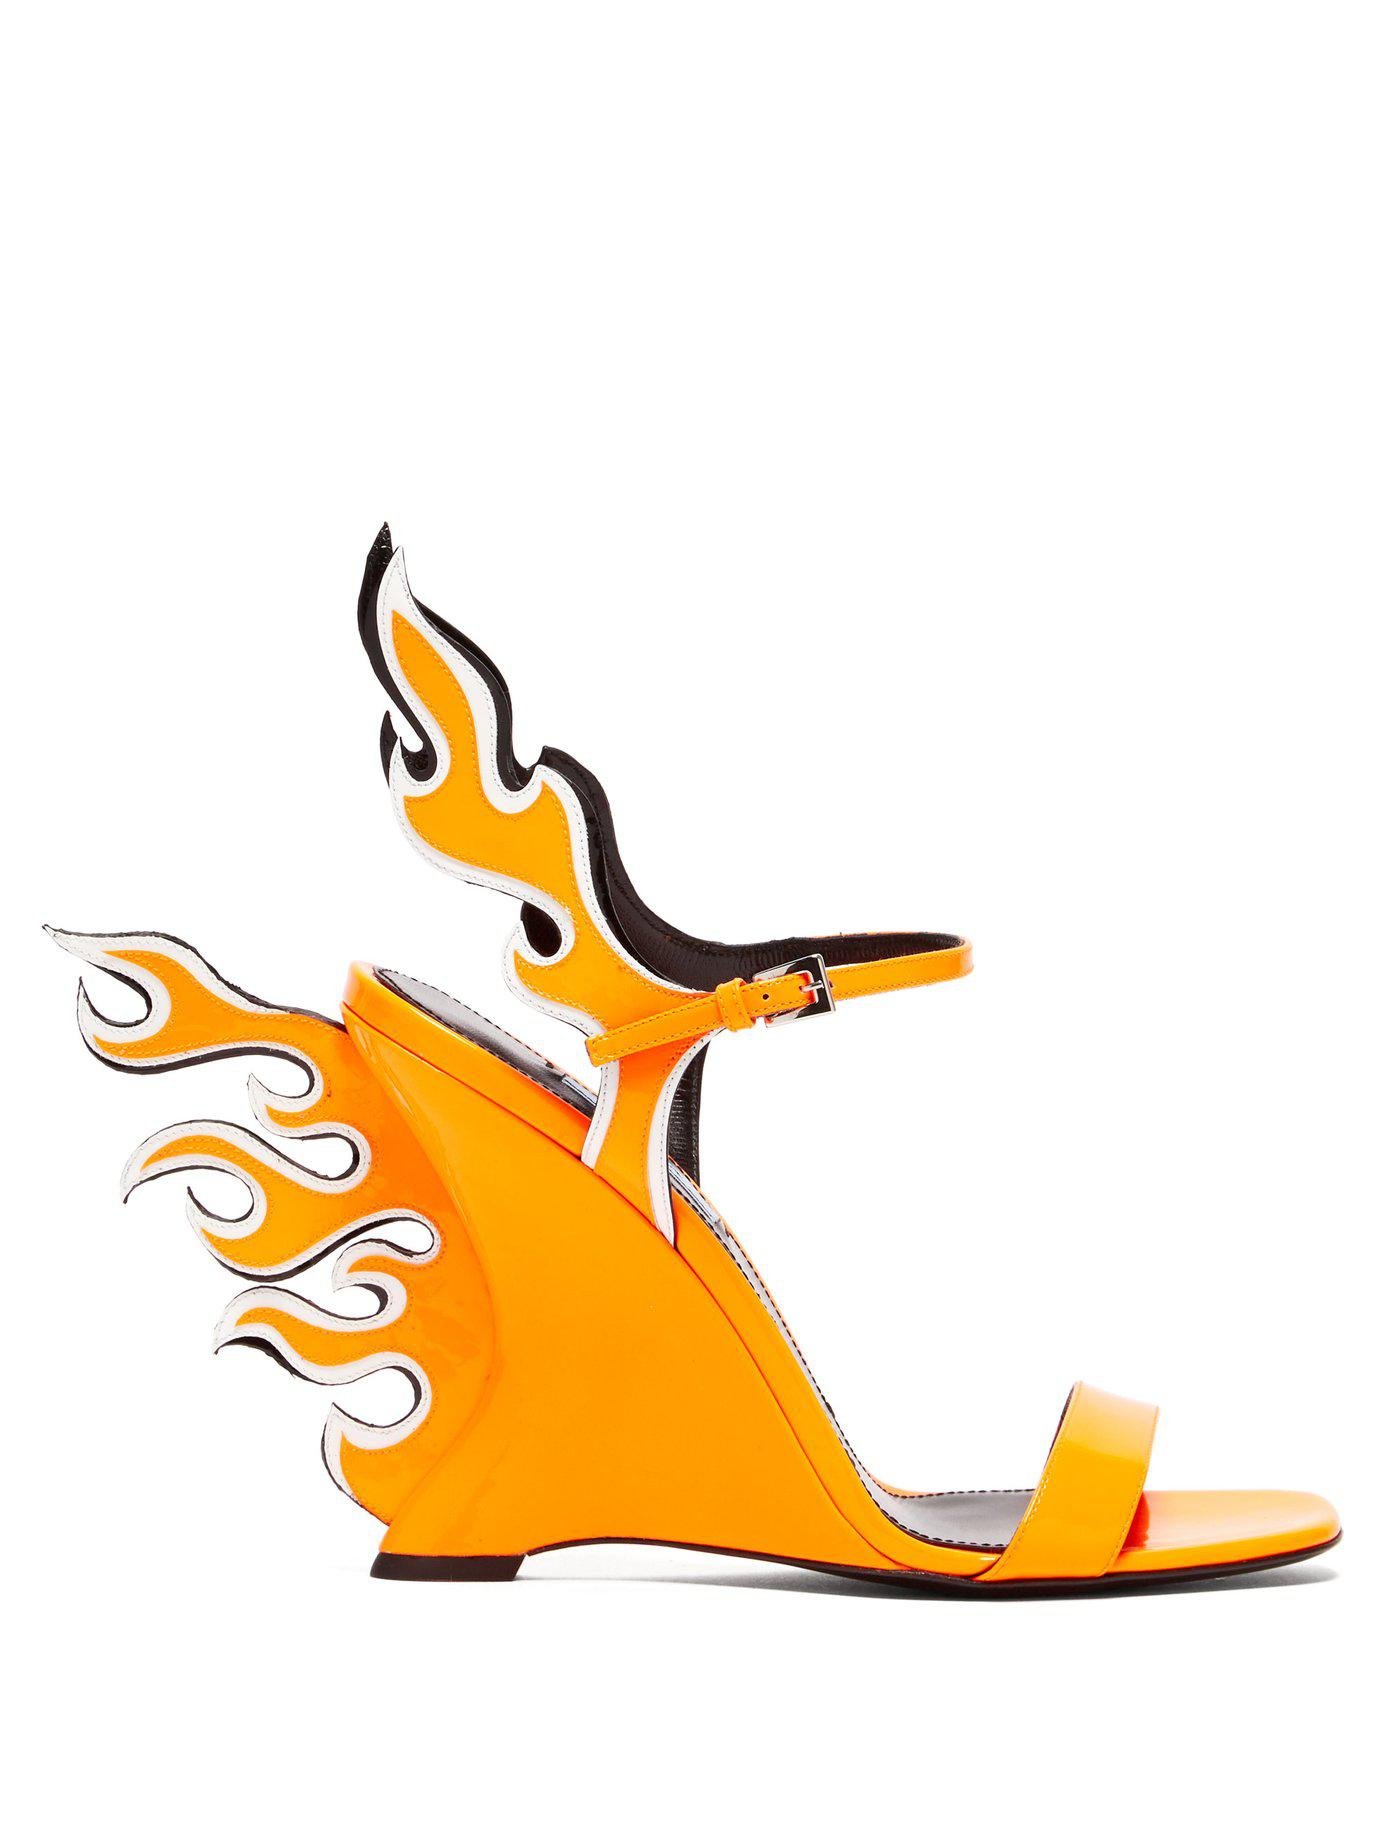 prada shoes flame, OFF 78%,www 